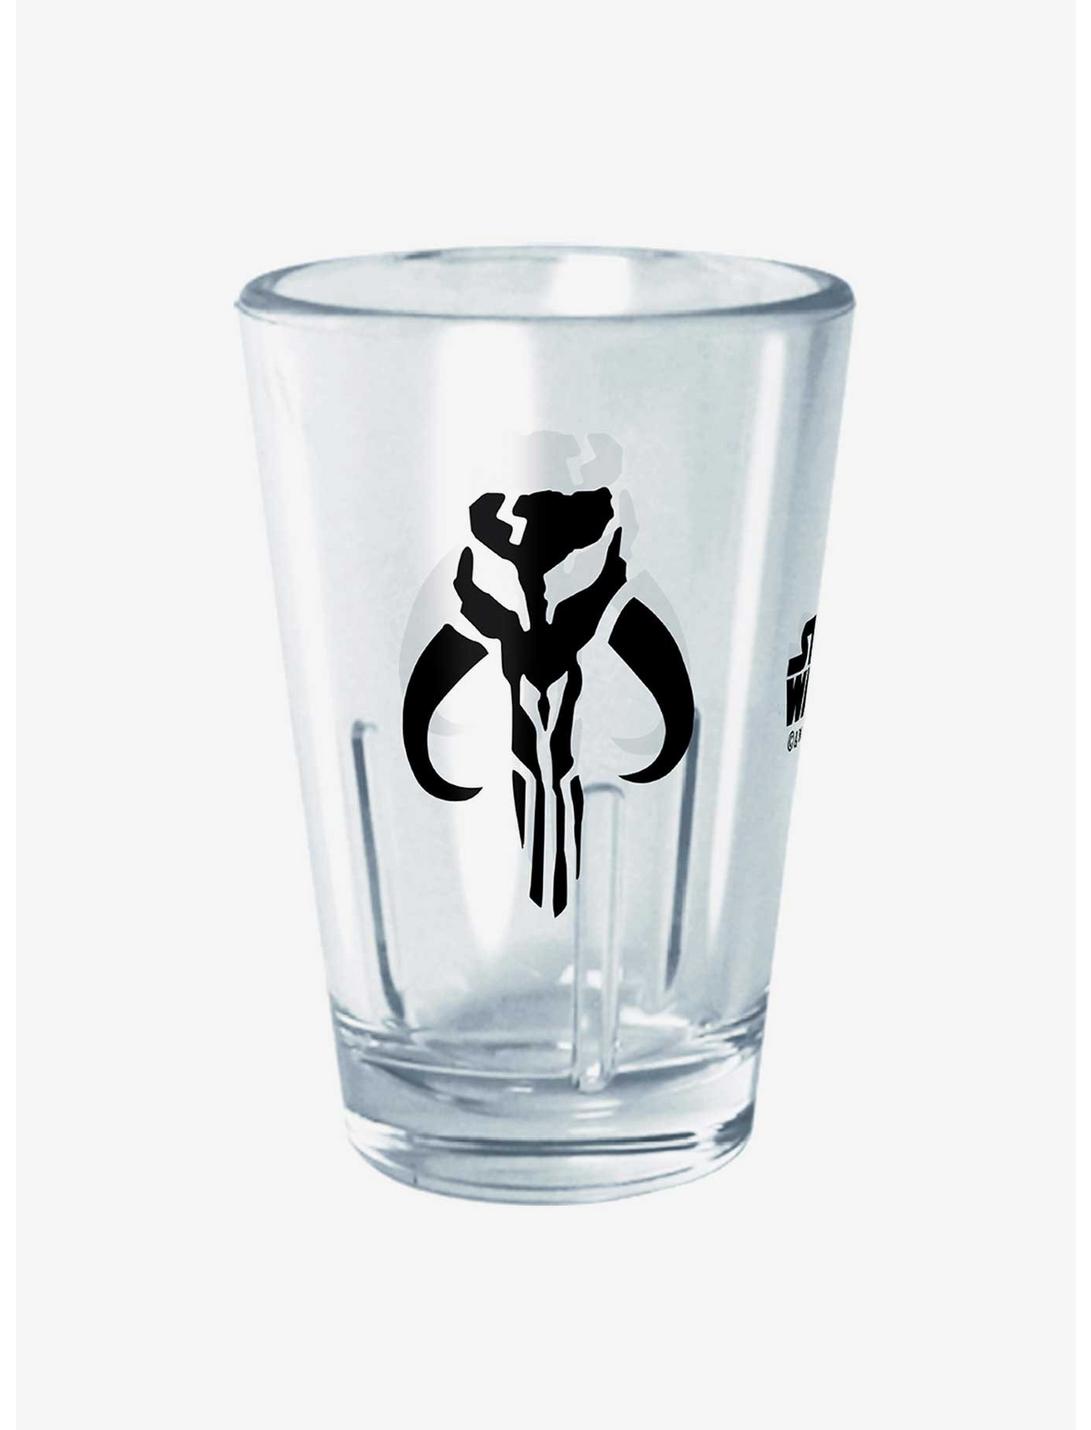 Star Wars Mandalorian Logo Mini Glass, , hi-res